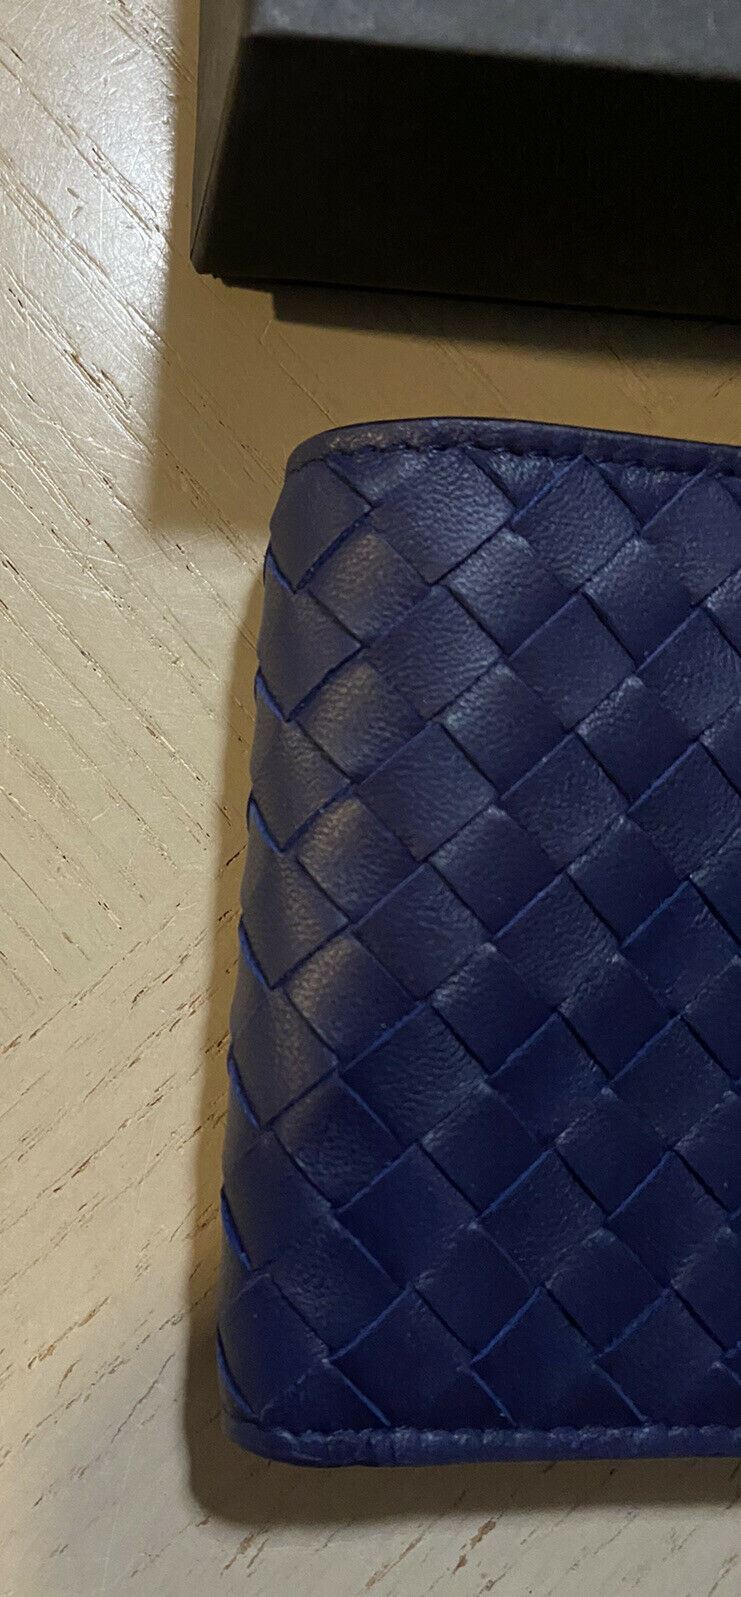 New Bottega Veneta Mens Wallet Slate Color Atlantic Blue 148324  Italy